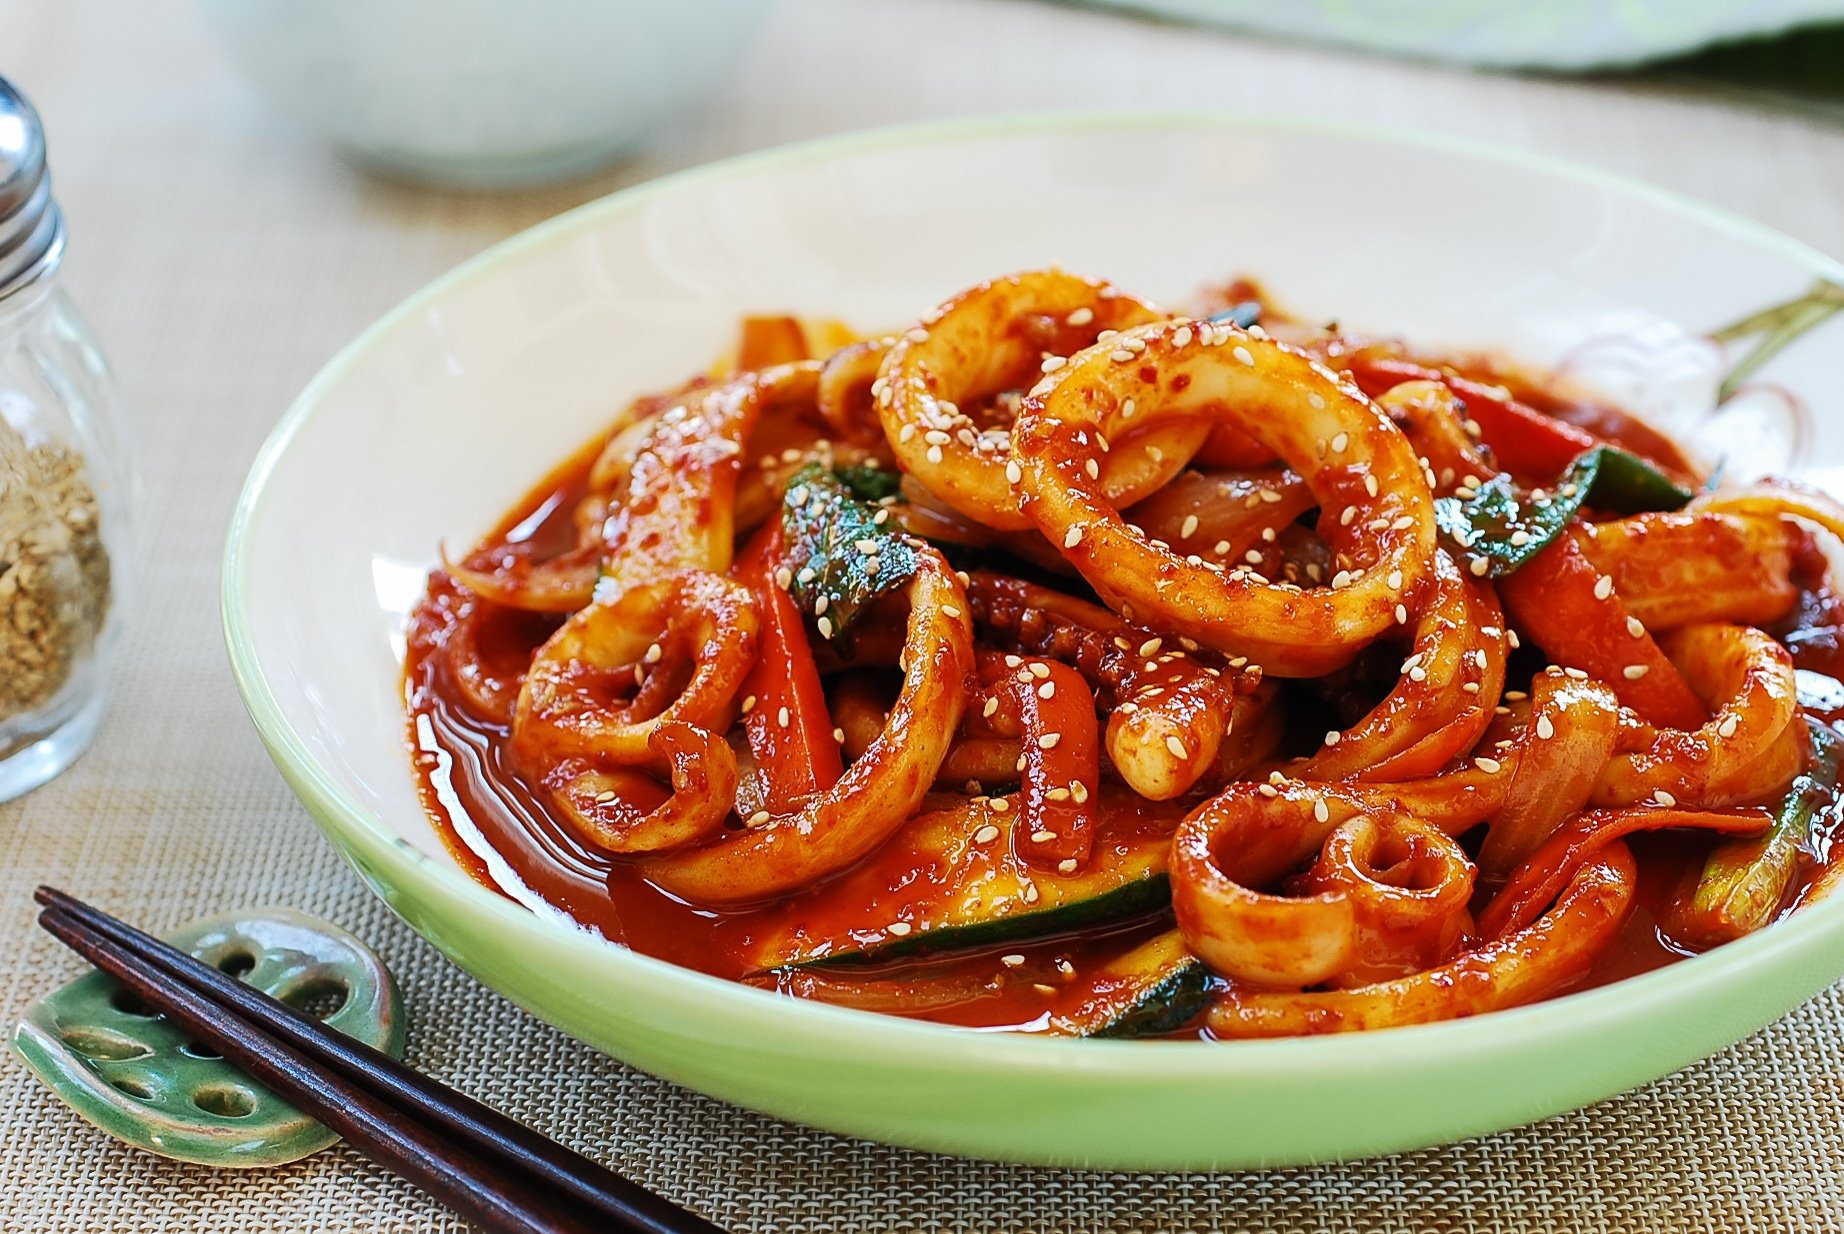 DSC 0011 1 - Ojingeo Bokkeum (Korean Spicy Stir-fried Squid)